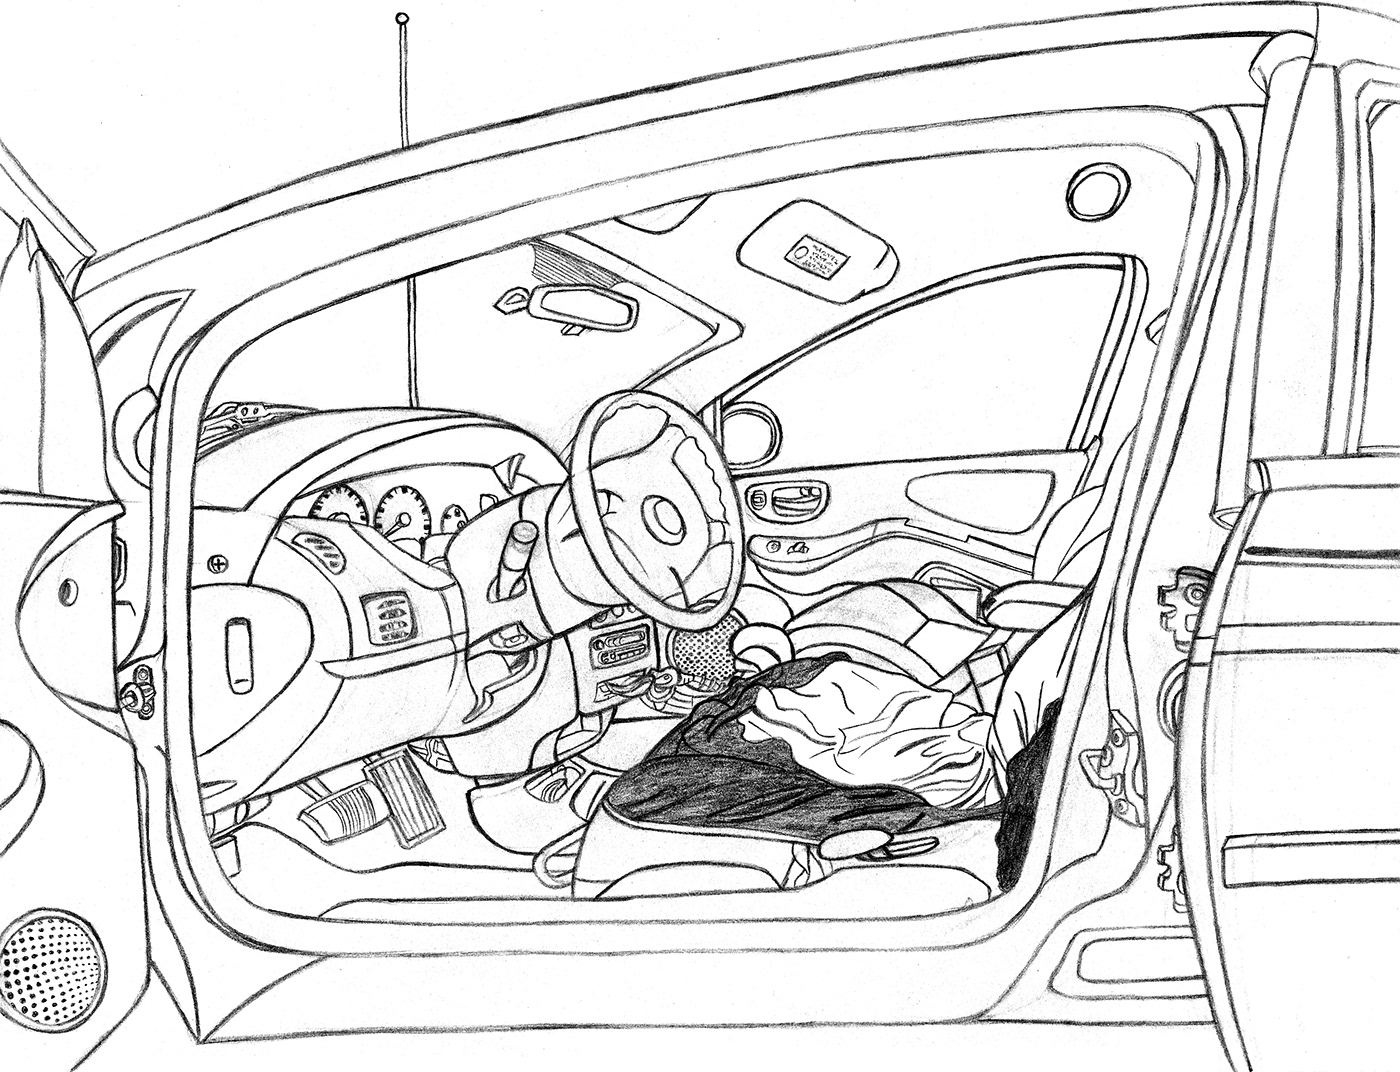 Michael Bowers jim carrey shoes bus Office nude Figure Drawing obama comics car caricatures superheroes Children's Books advertisements